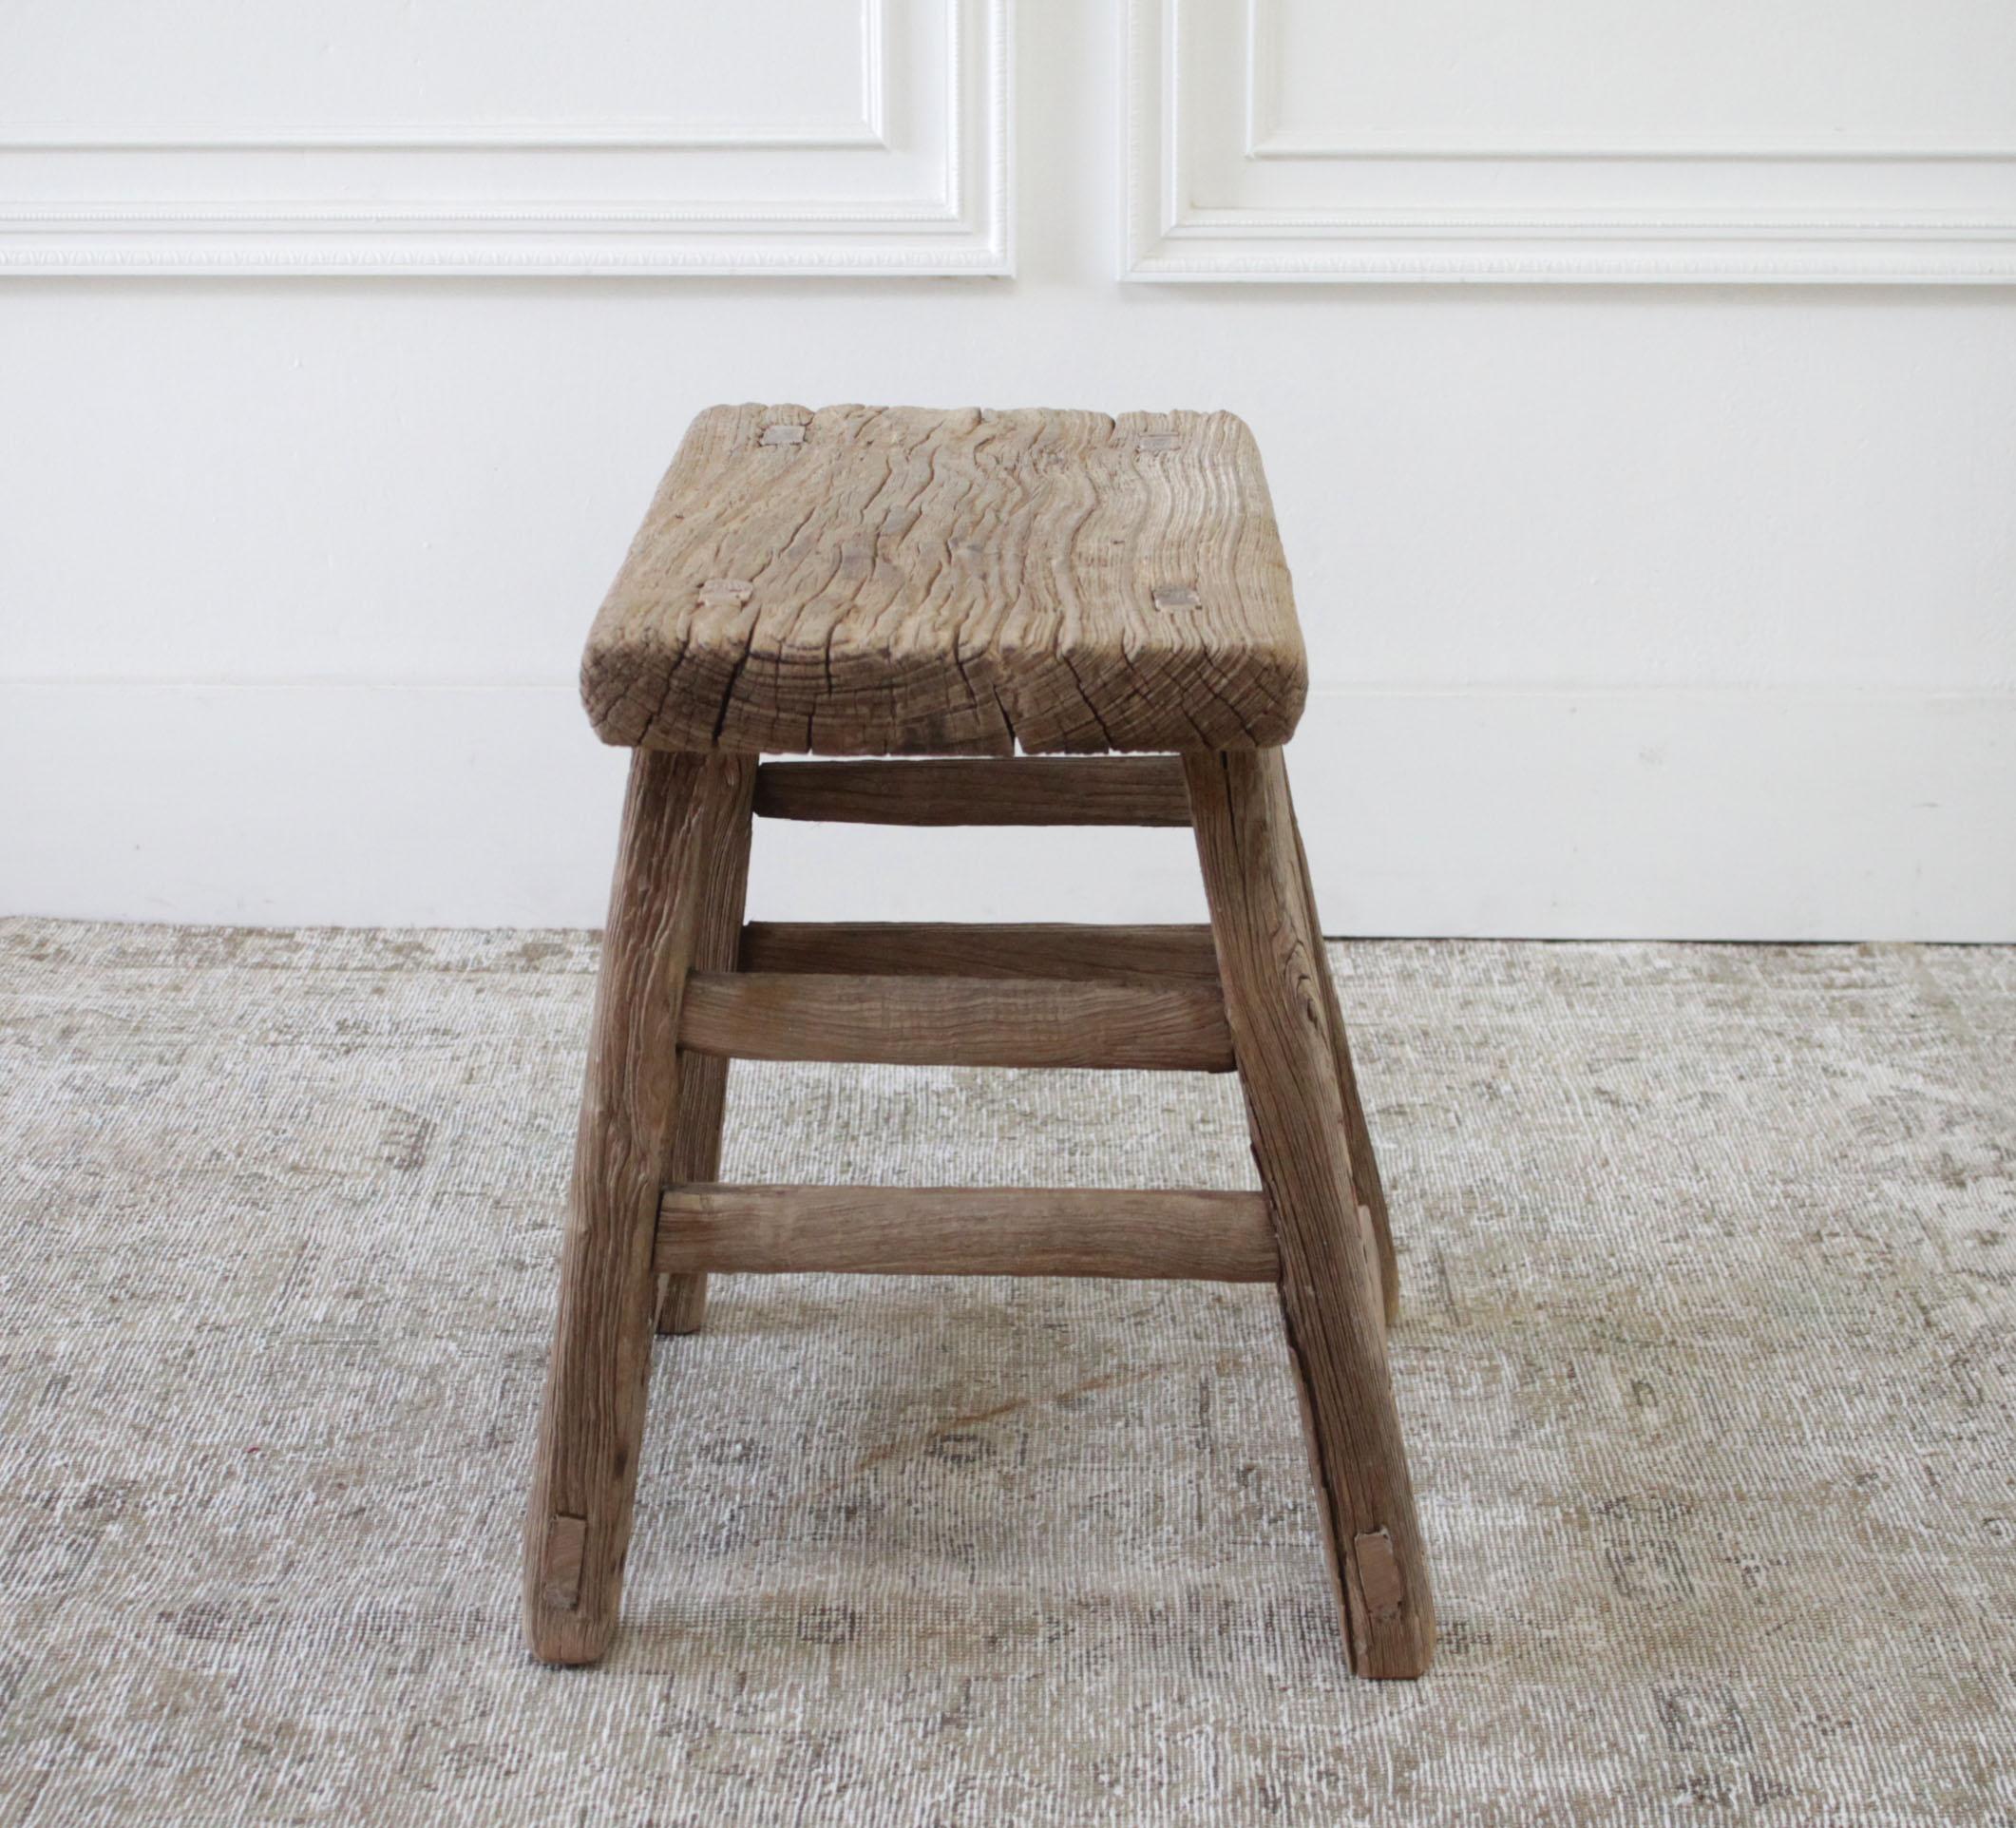 Rustic Vintage Antique Elm Wood Side Table or Stool